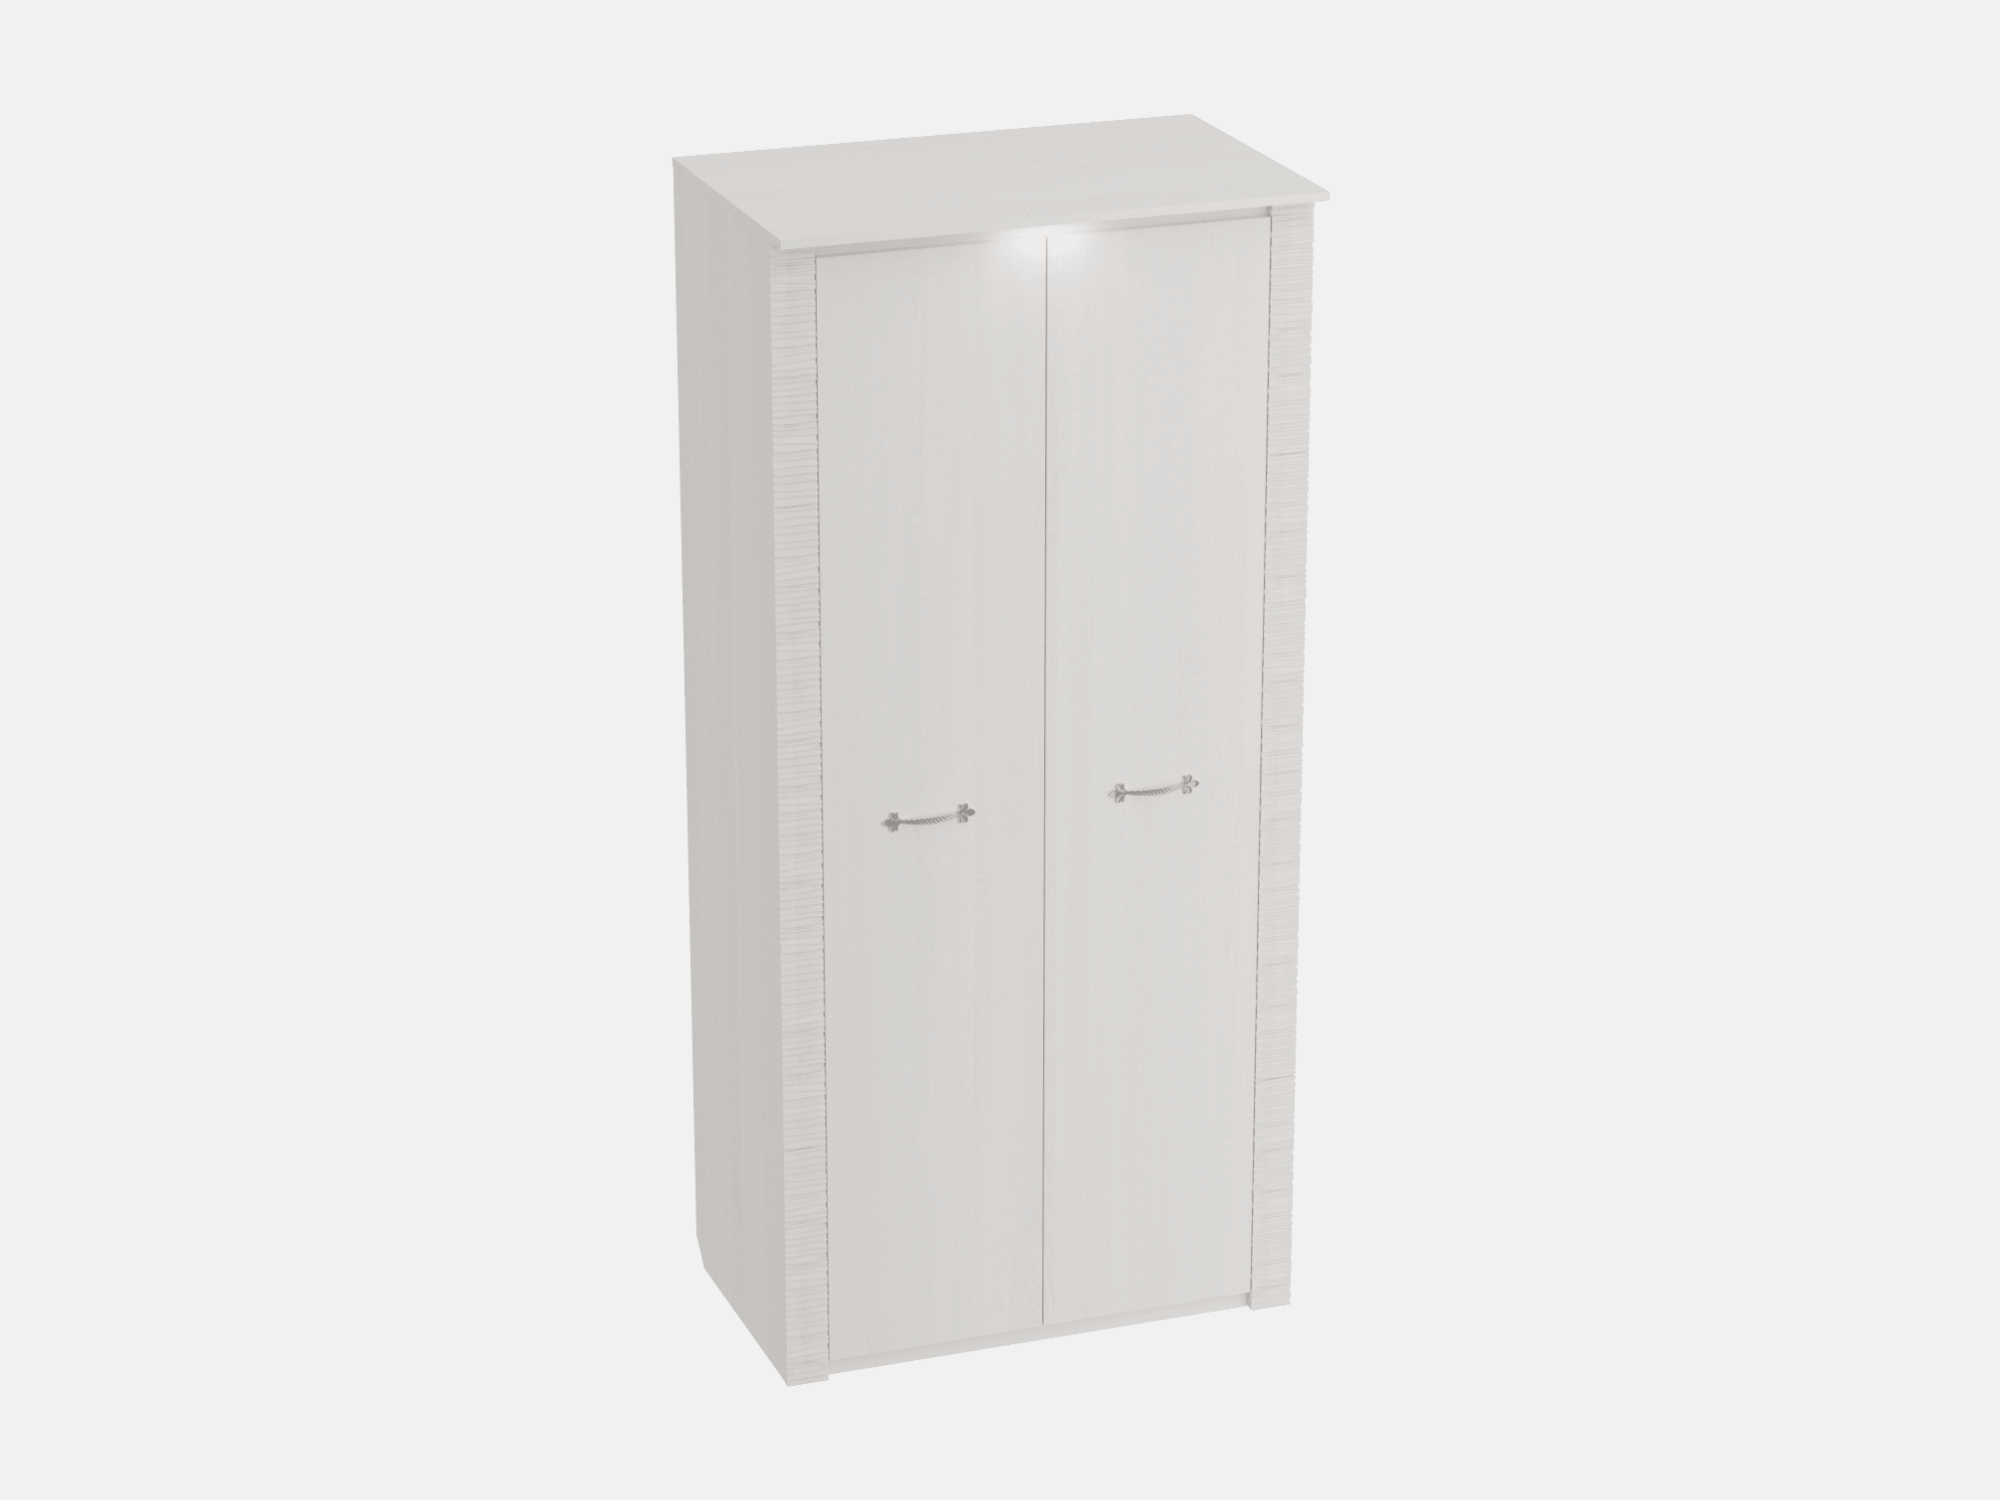 Элана спальня Шкаф 2-дверный, бодега (Бодега белая) Белый, МДФ, ЛДСП элана стеллаж бодега бодега белая белый лдсп